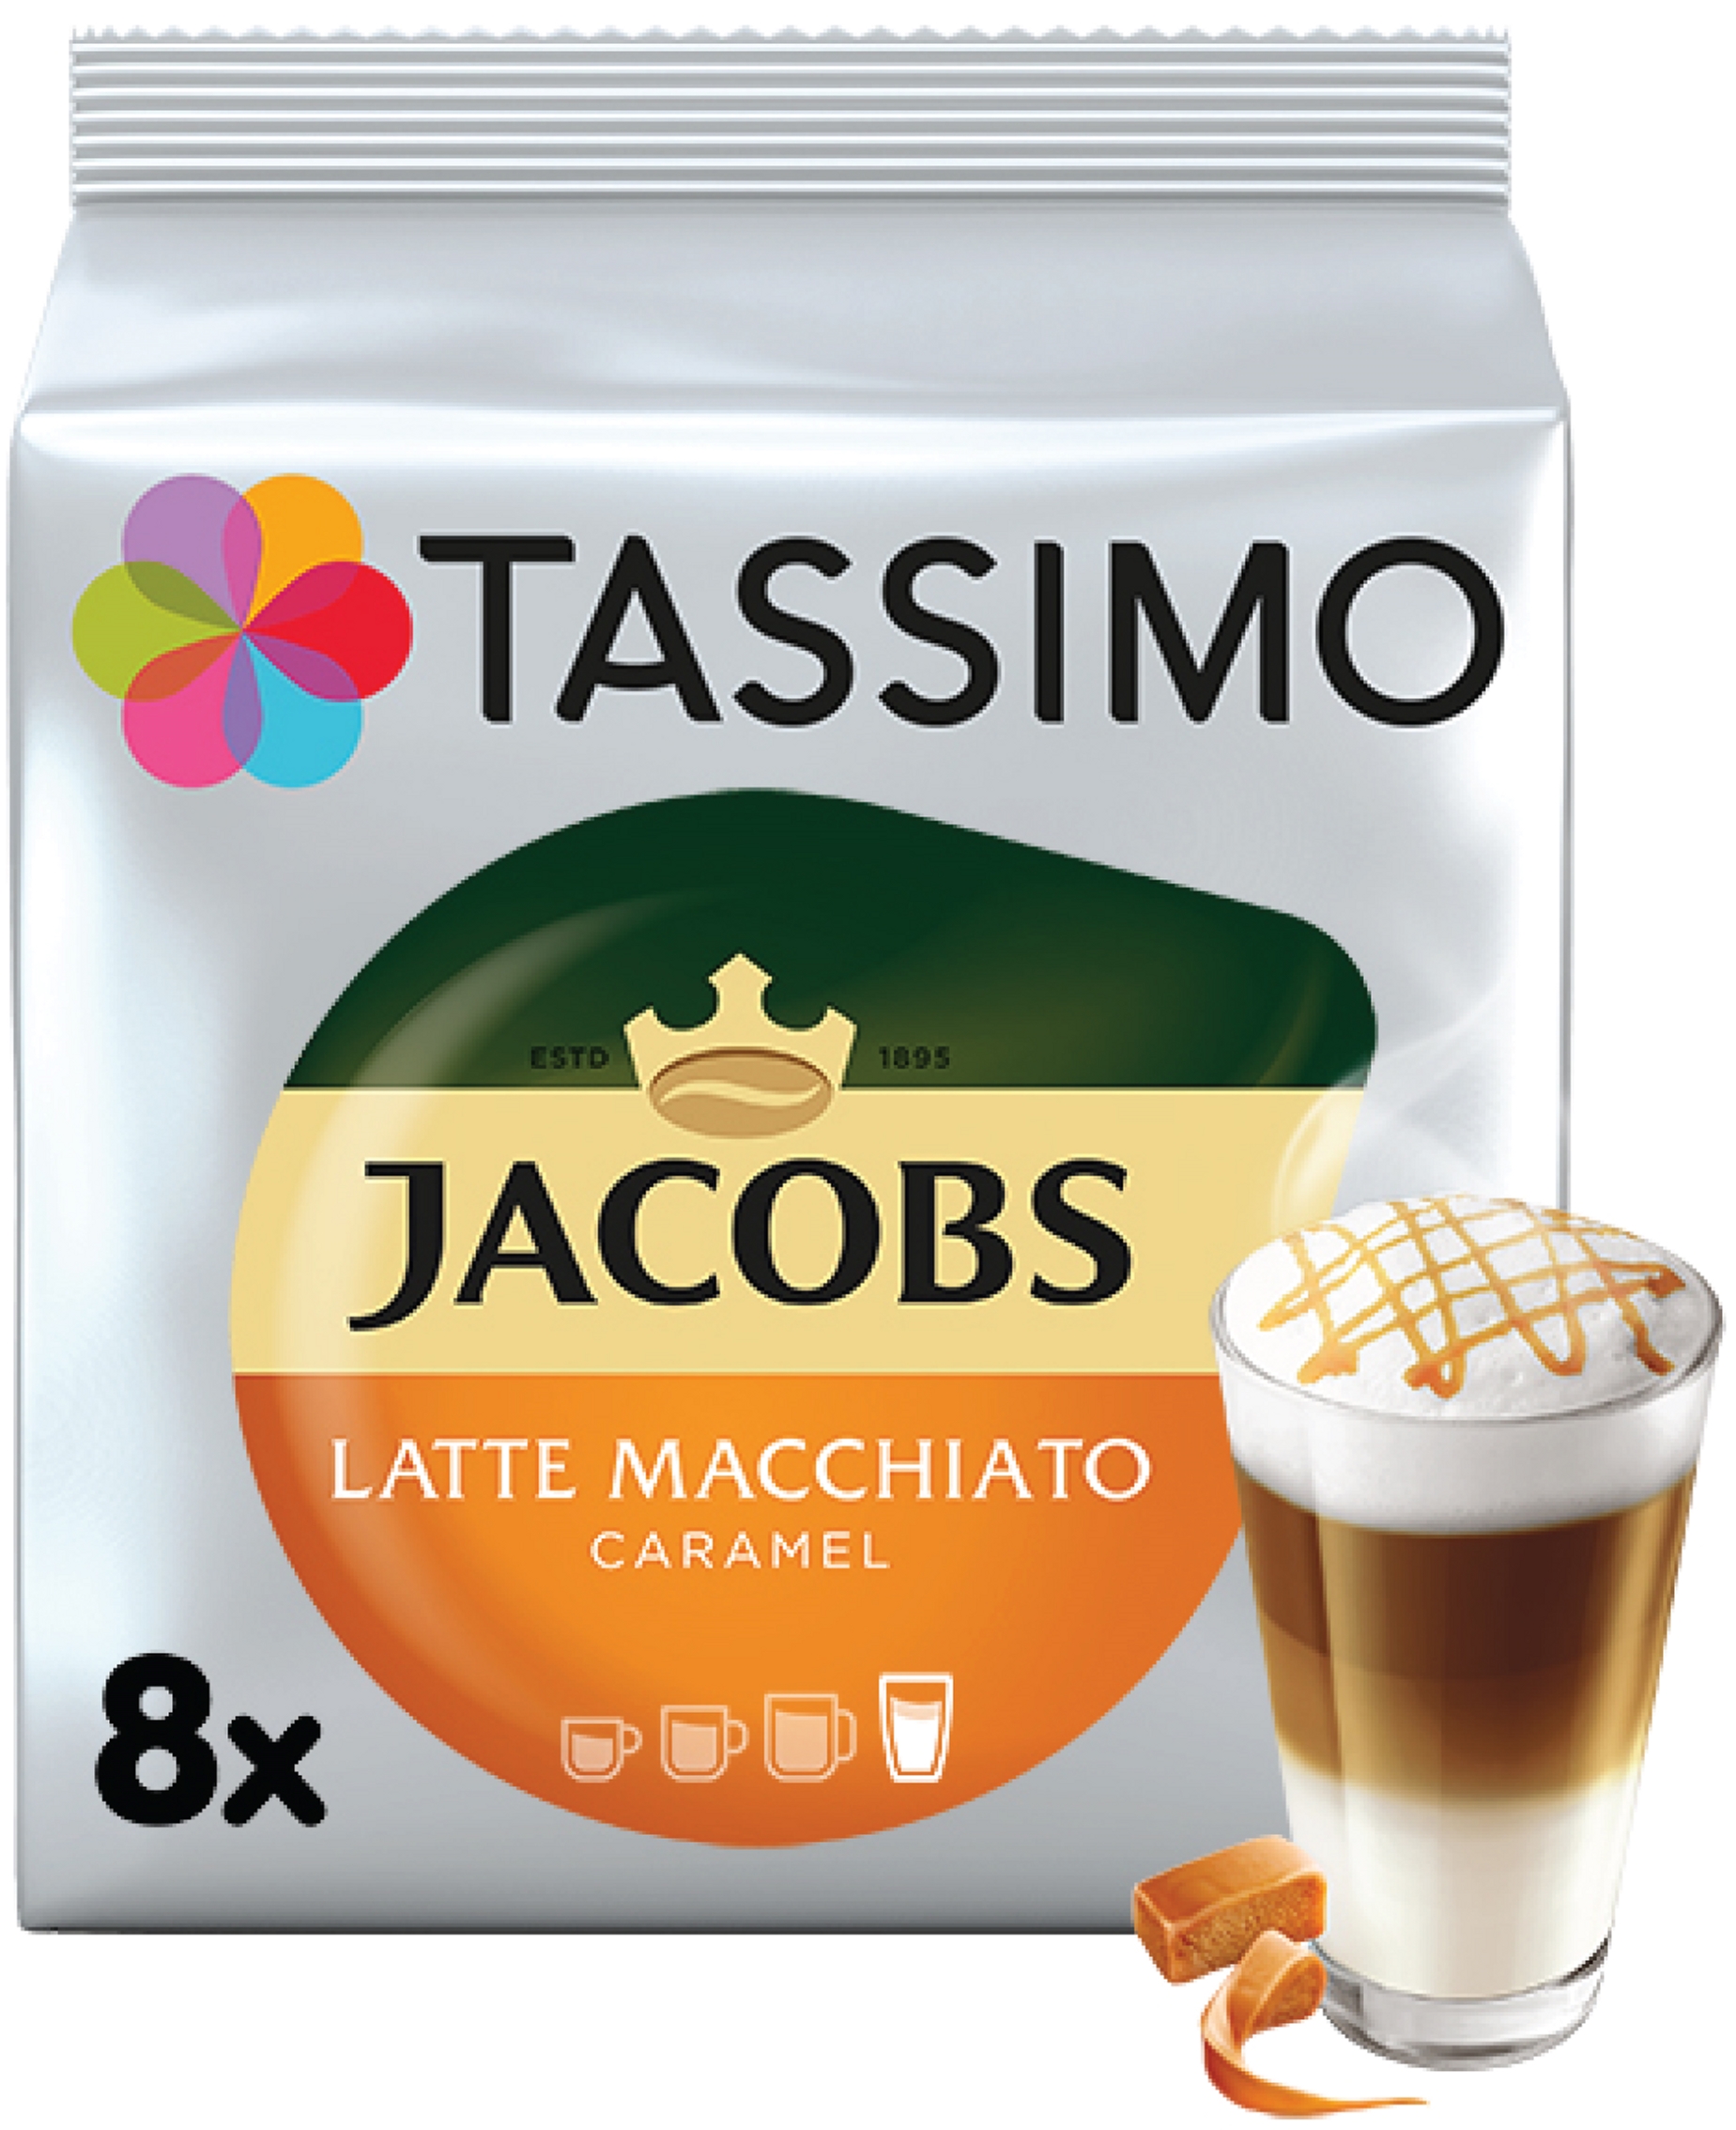 Tassimo Café dosettes Maxwell house latte macchiato caramel, 8 capsules